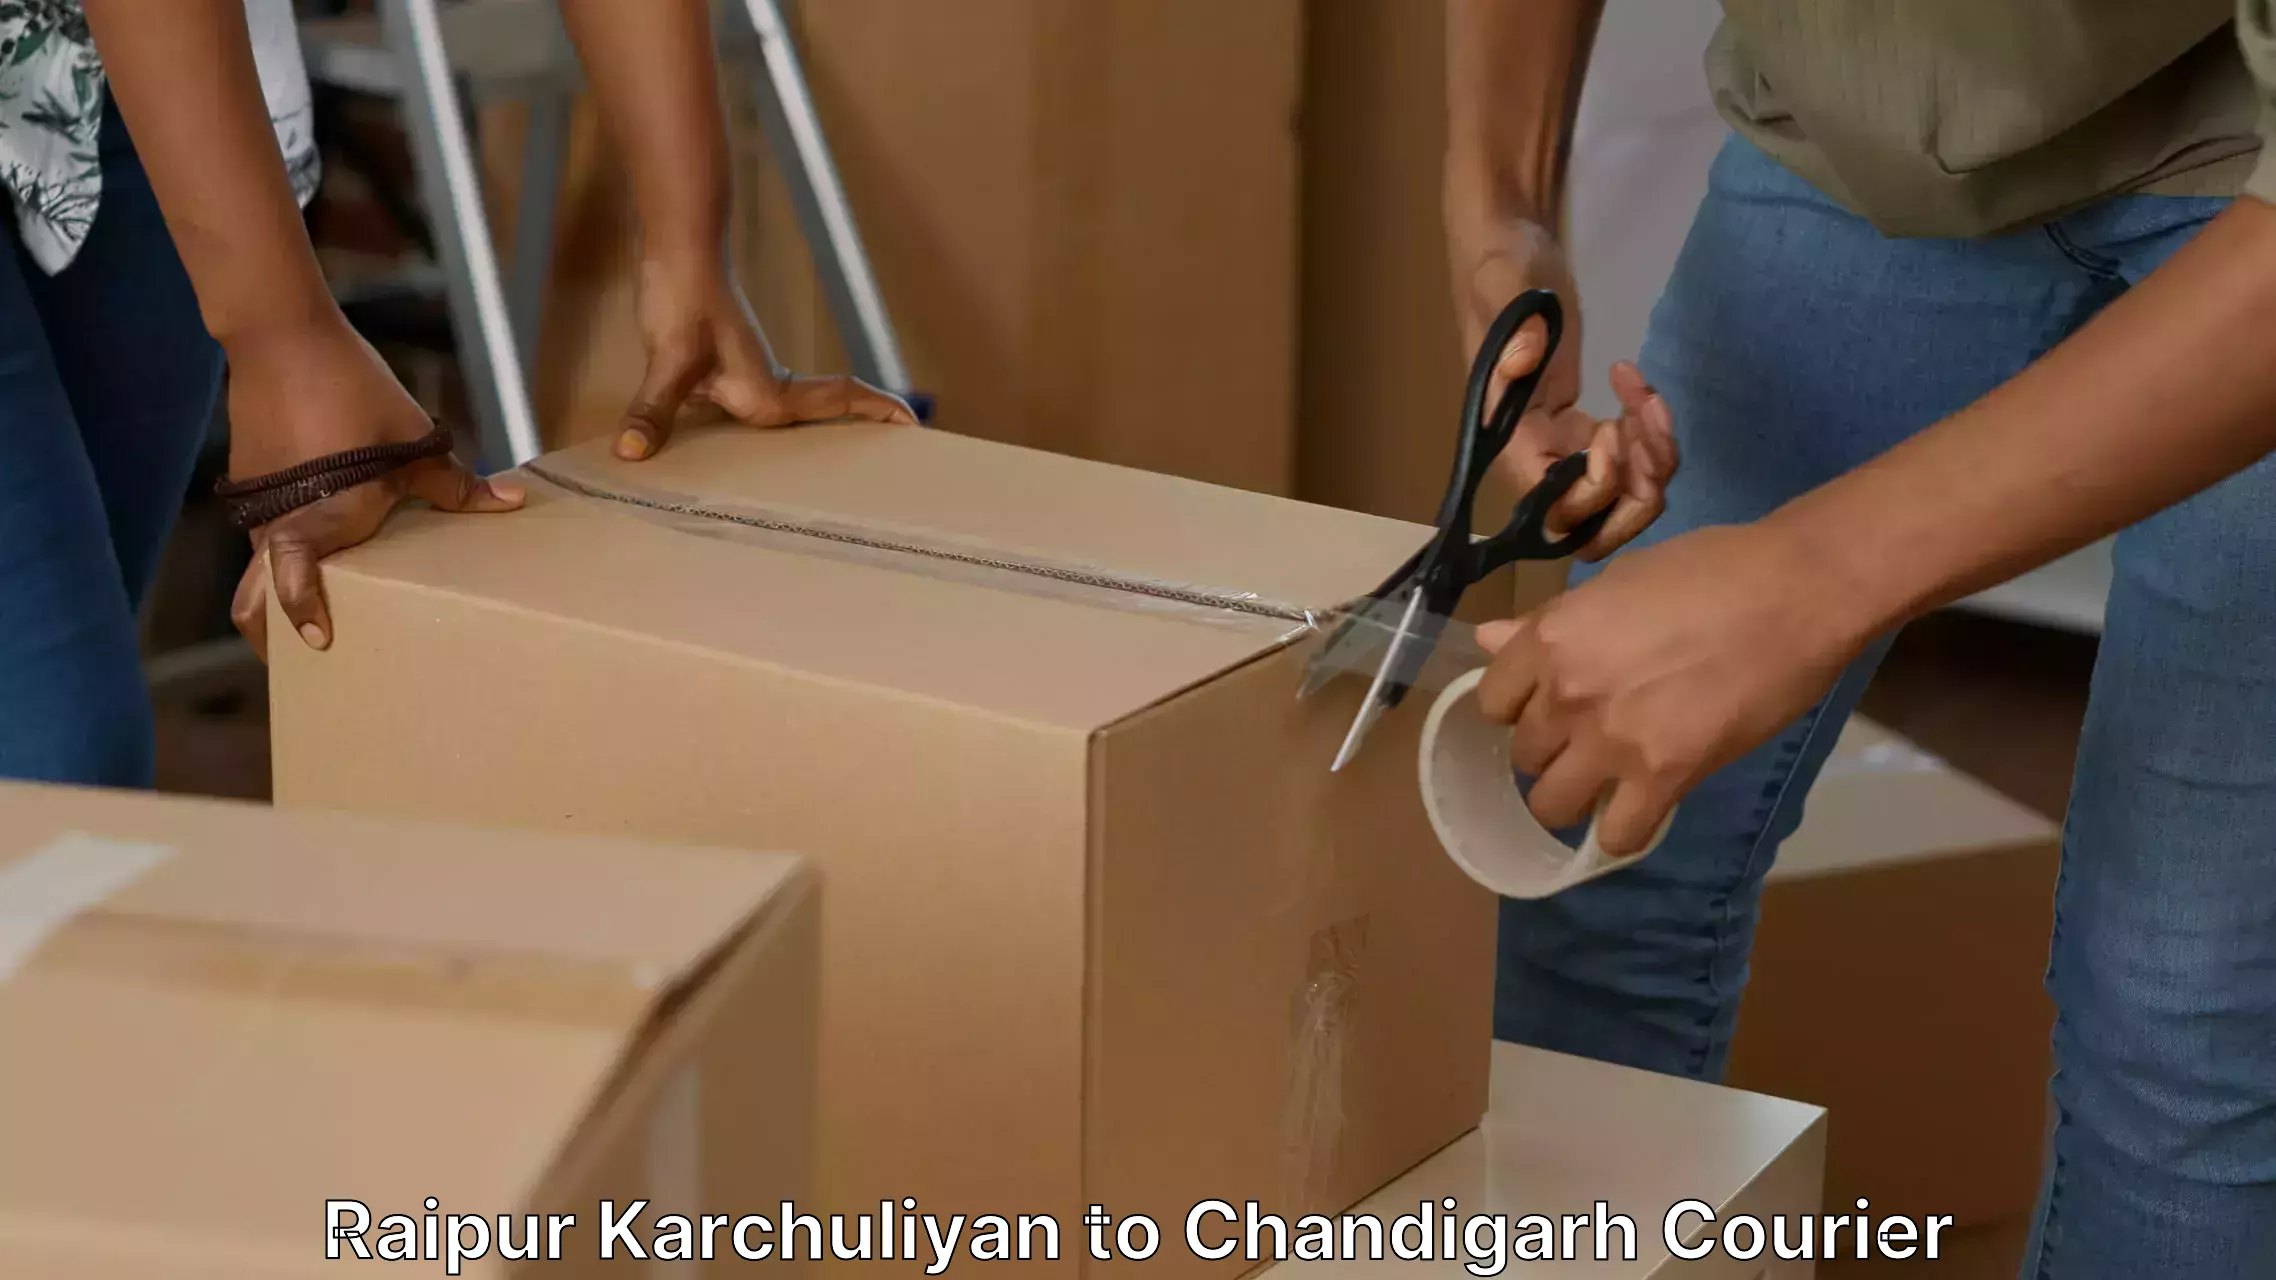 Furniture transport company Raipur Karchuliyan to Chandigarh